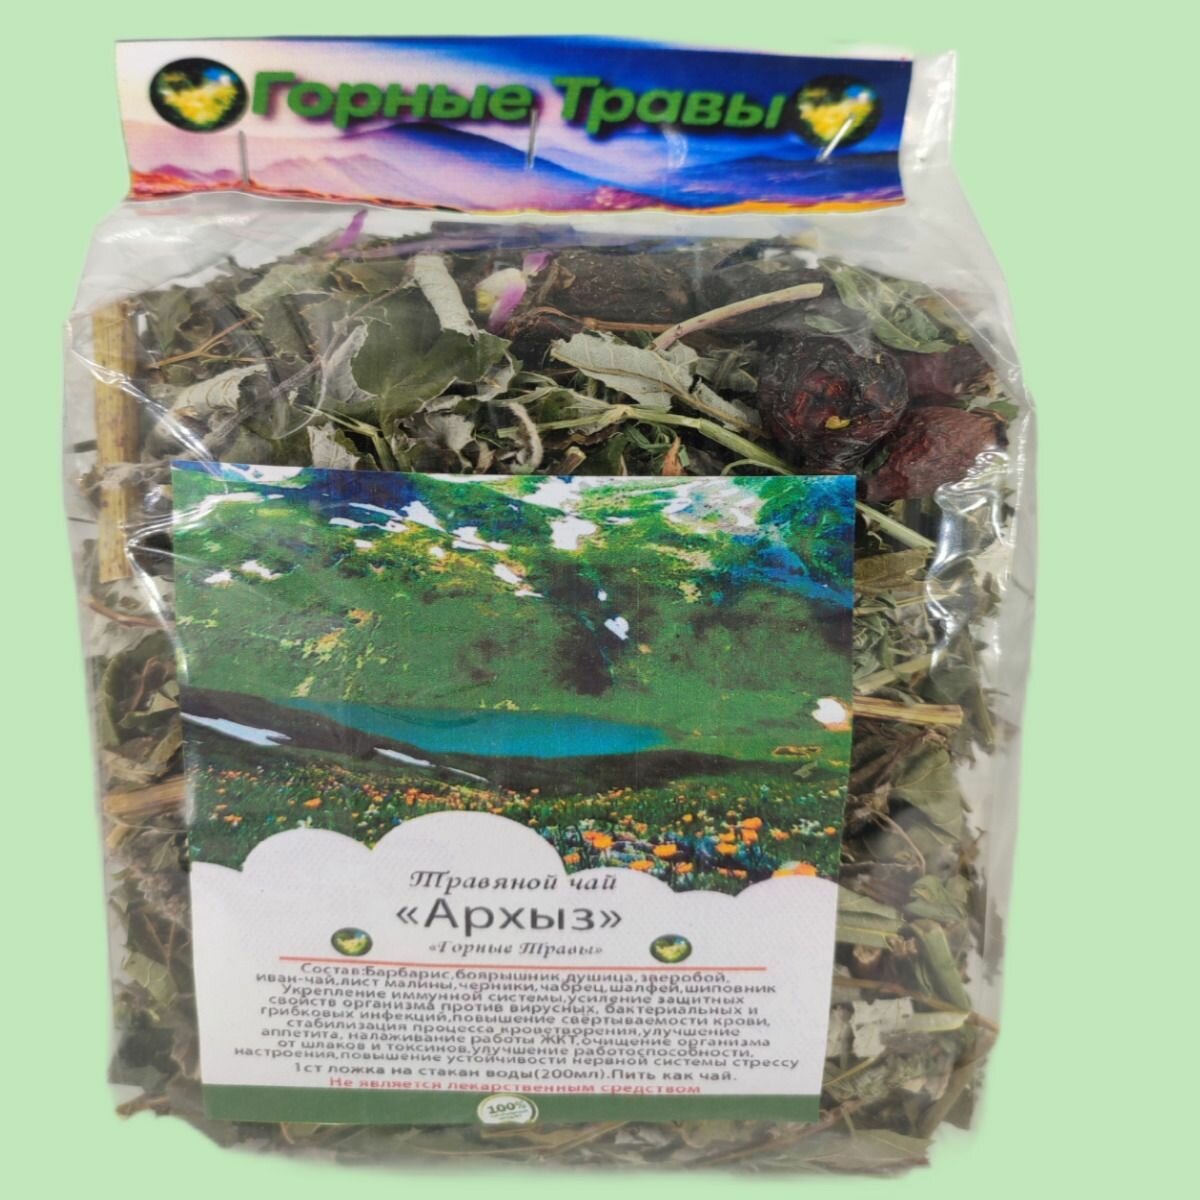 Травяной чай Архыз собран с горных трав